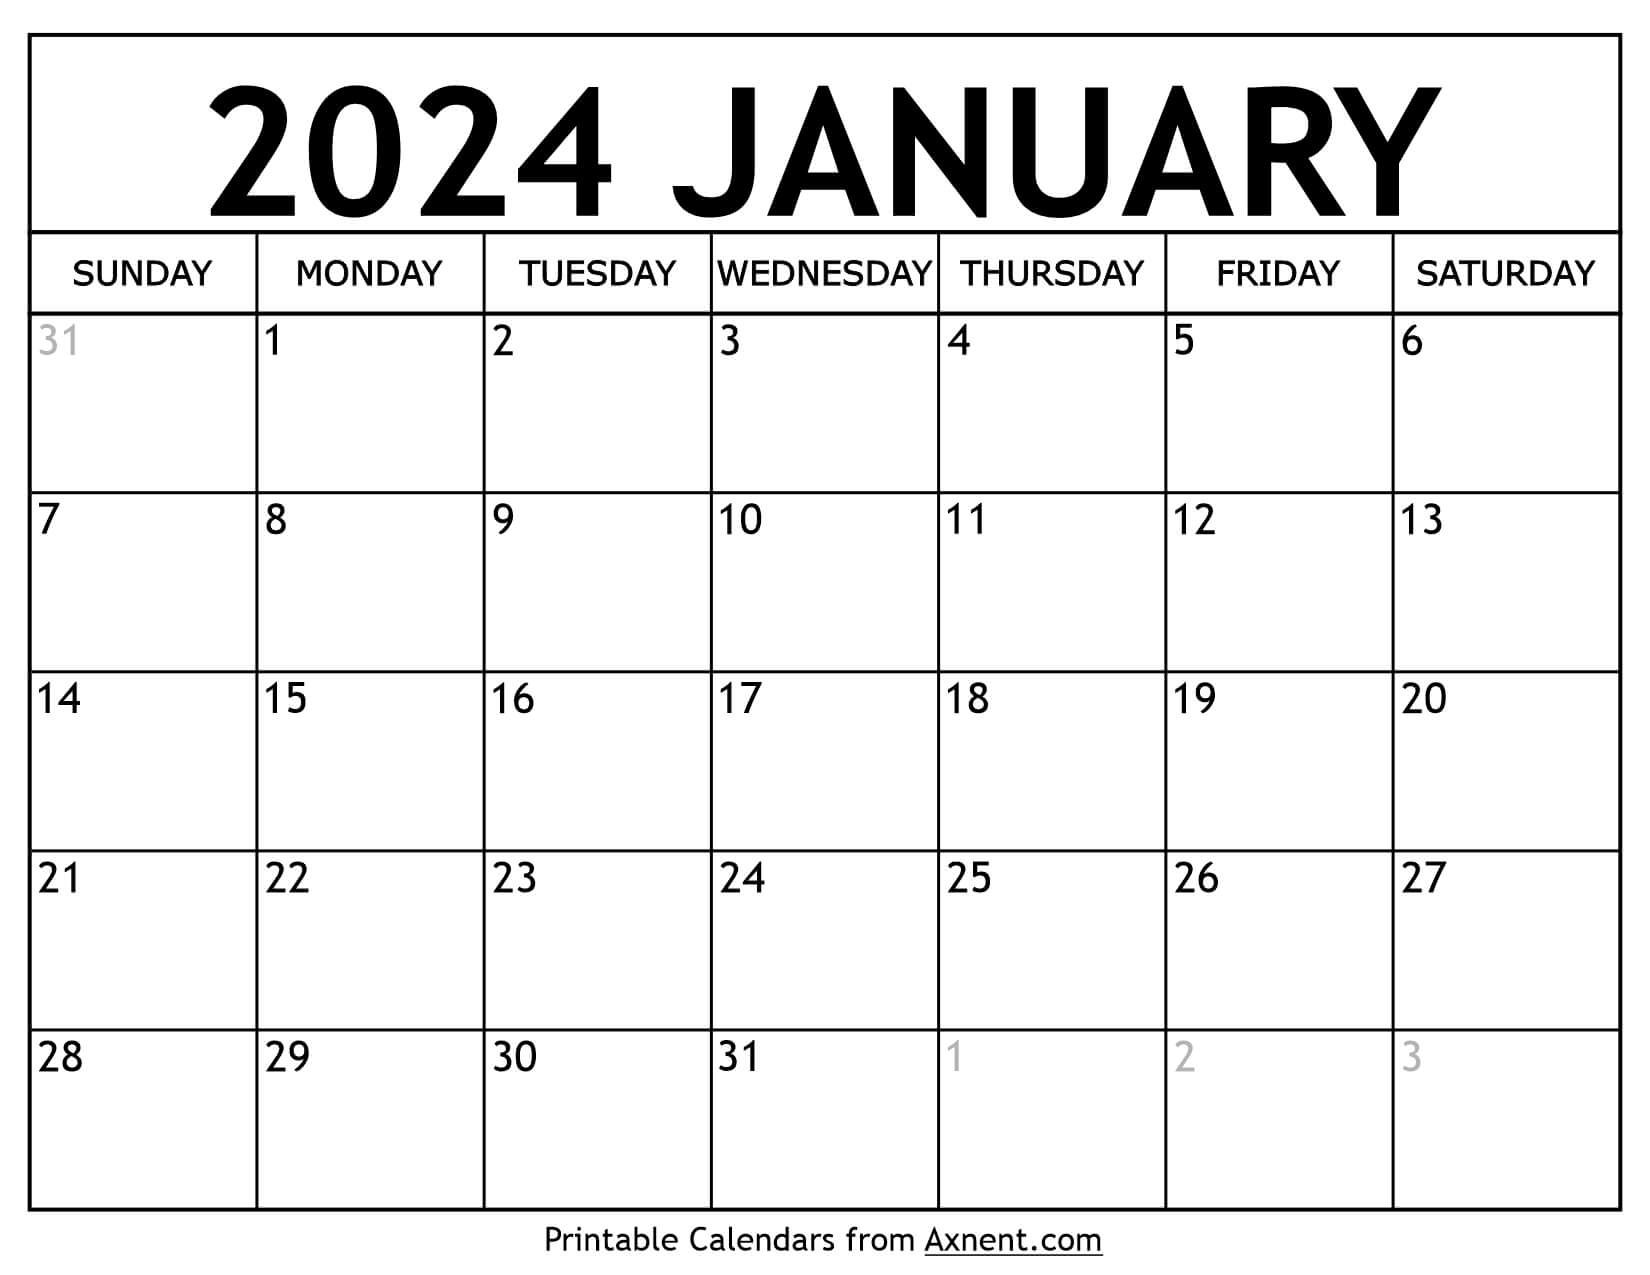 Printable January 2024 Calendar Template - Print Now for Jan 2024 Calendar Free Printable